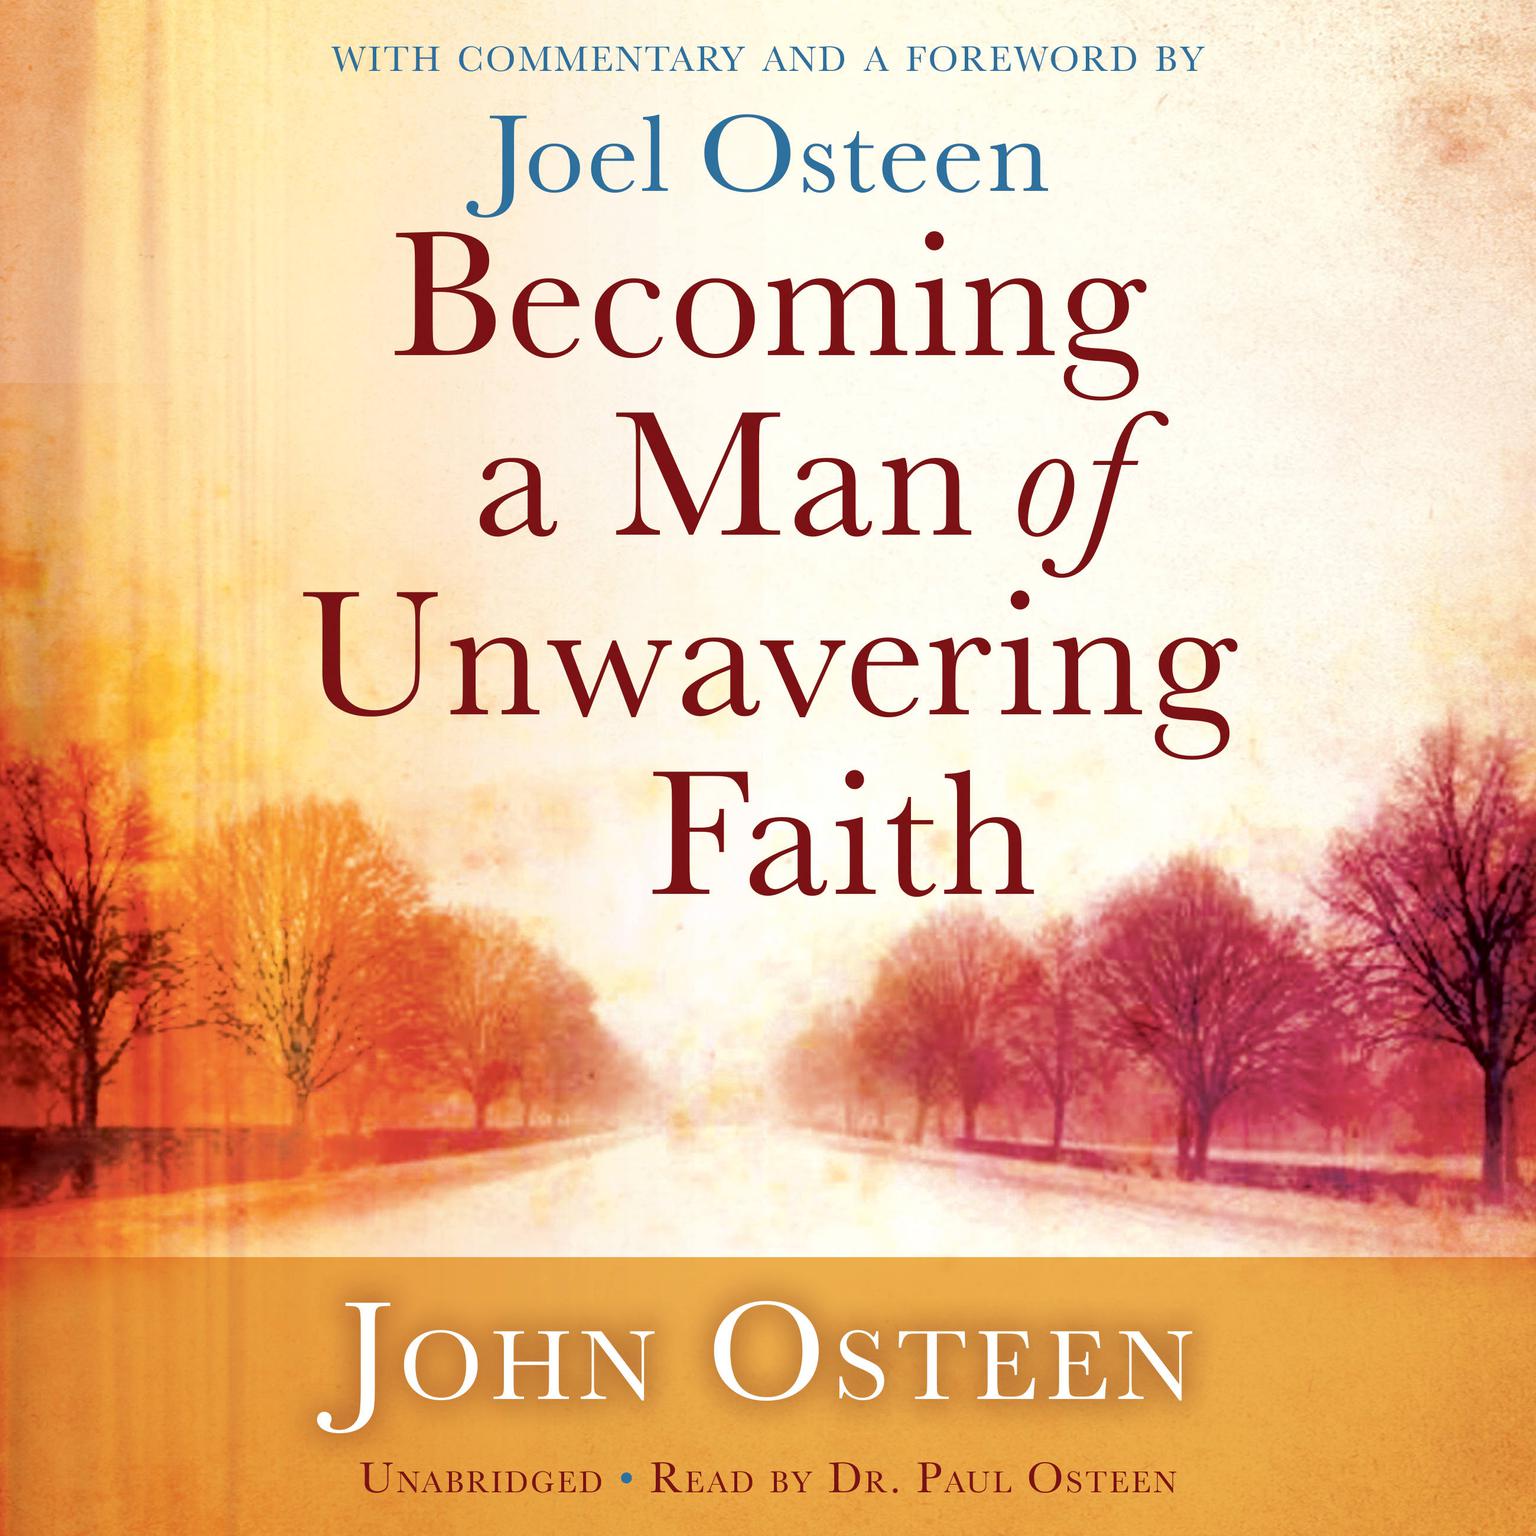 Becoming a Man of Unwavering Faith Audiobook, by John Osteen